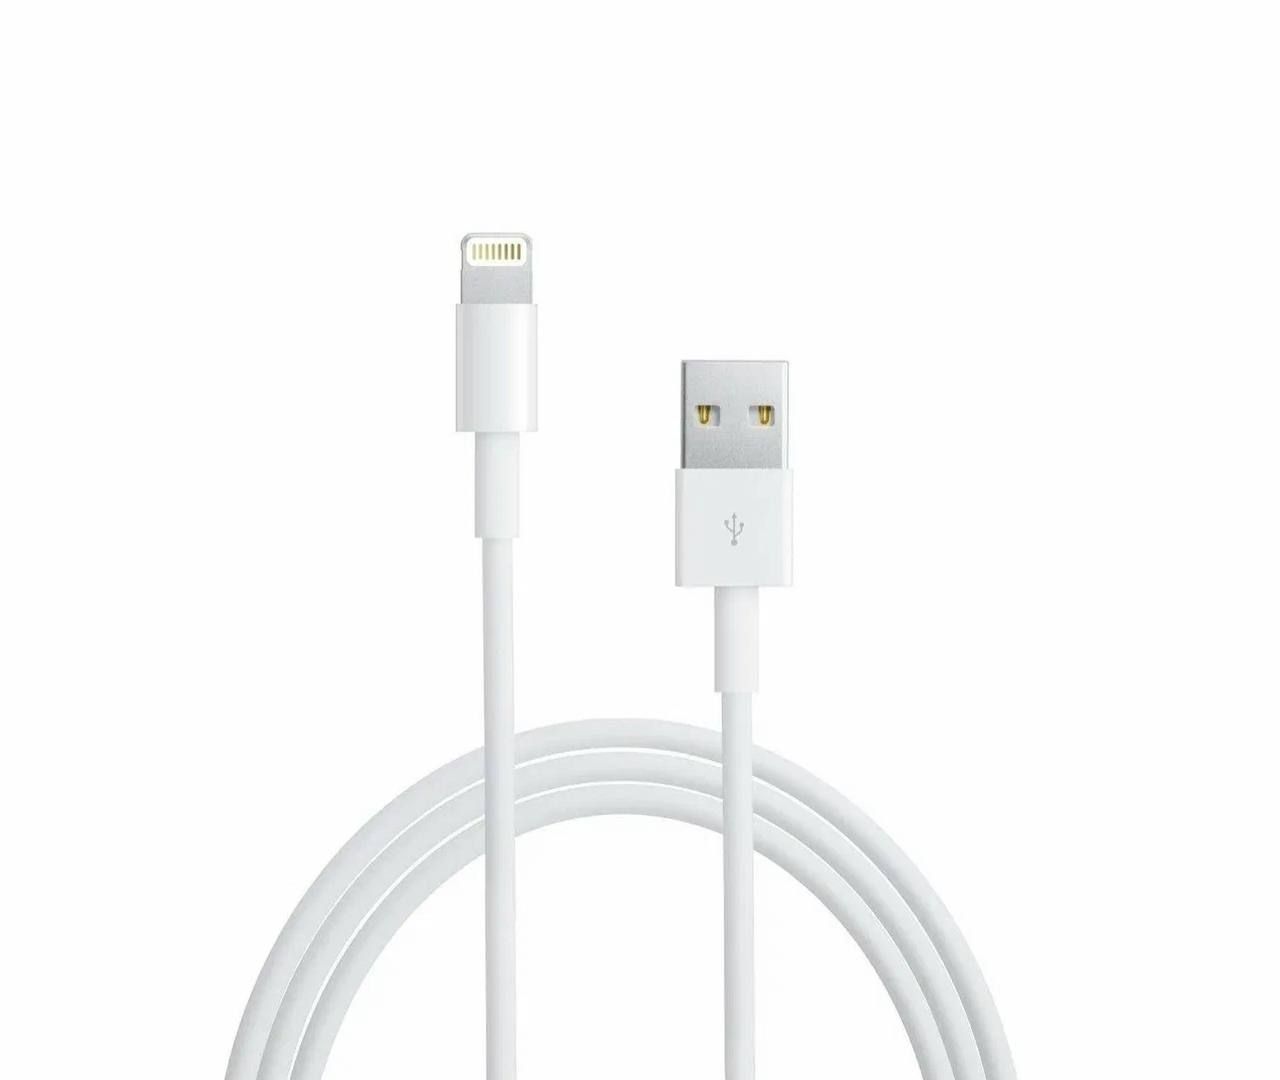 Зарядка lightning usb c. Md819zm/a кабель Lightning to USB Cable (2m). Apple Lightning to USB 1 M. Кабель Apple me291zm/a, Lightning (m) - USB (M), 0.5М, MFI. Кабель Apple USB Type c - Lightning 1m mqgj2zm/a.